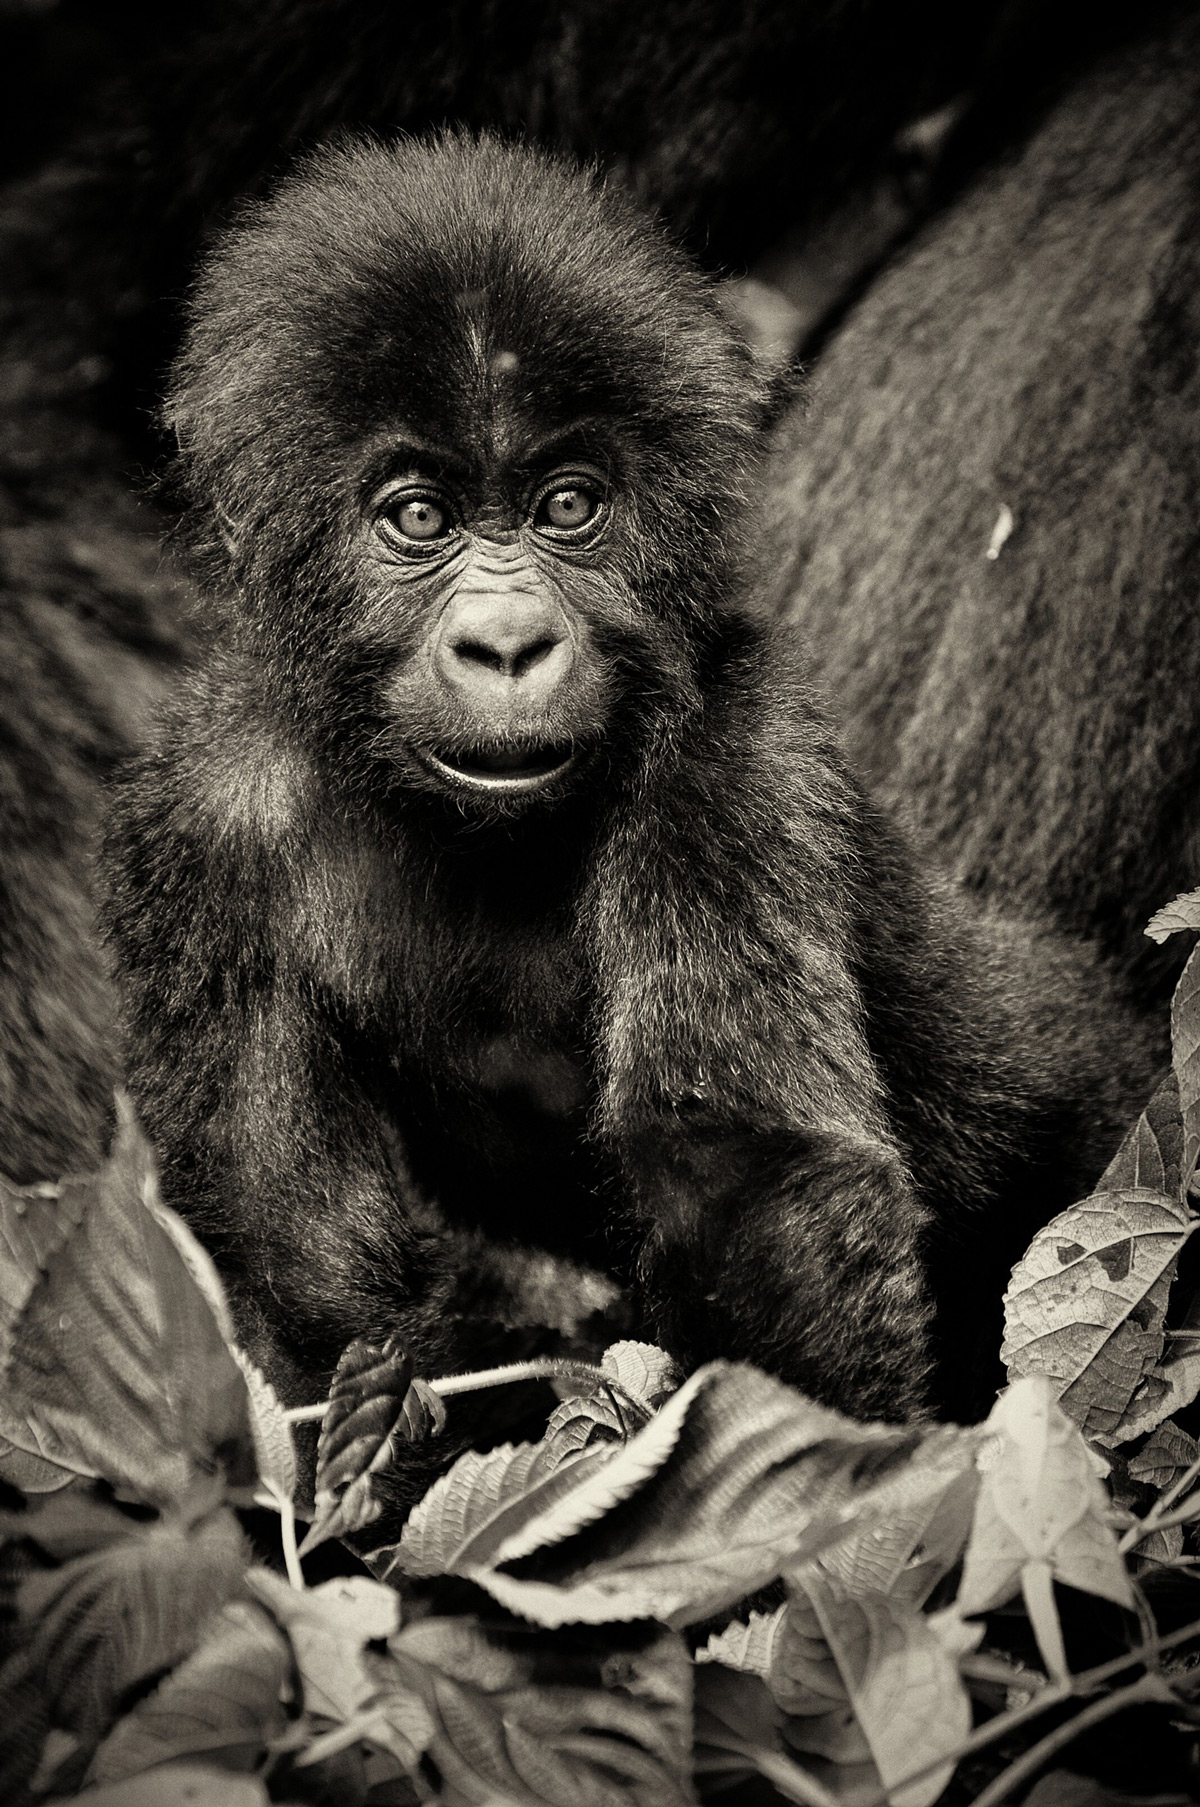 An eastern lowland gorilla (Grauer’s gorilla) infant in Kahuzi-Biega National Park, Democratic Republic of the Congo © Sushil Chauhan